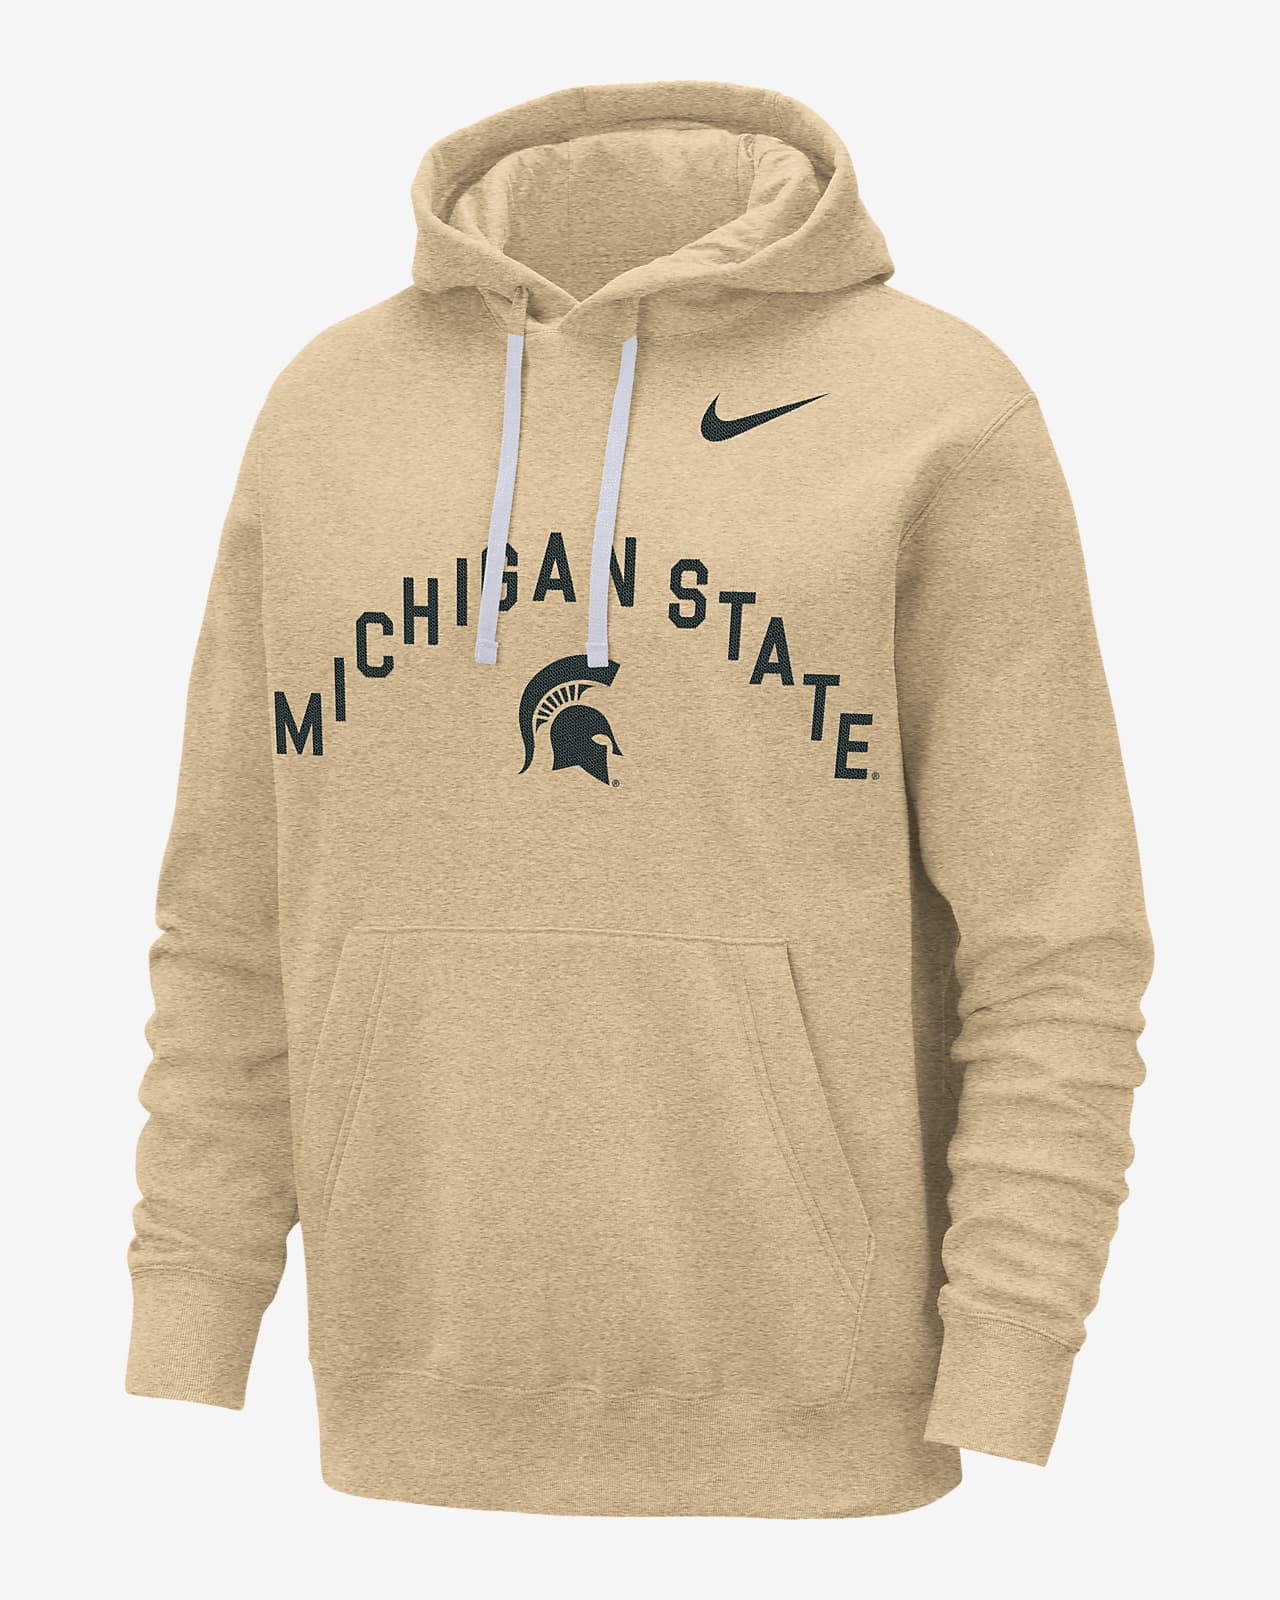 Michigan State Club Fleece Men's Nike College Pullover Hoodie